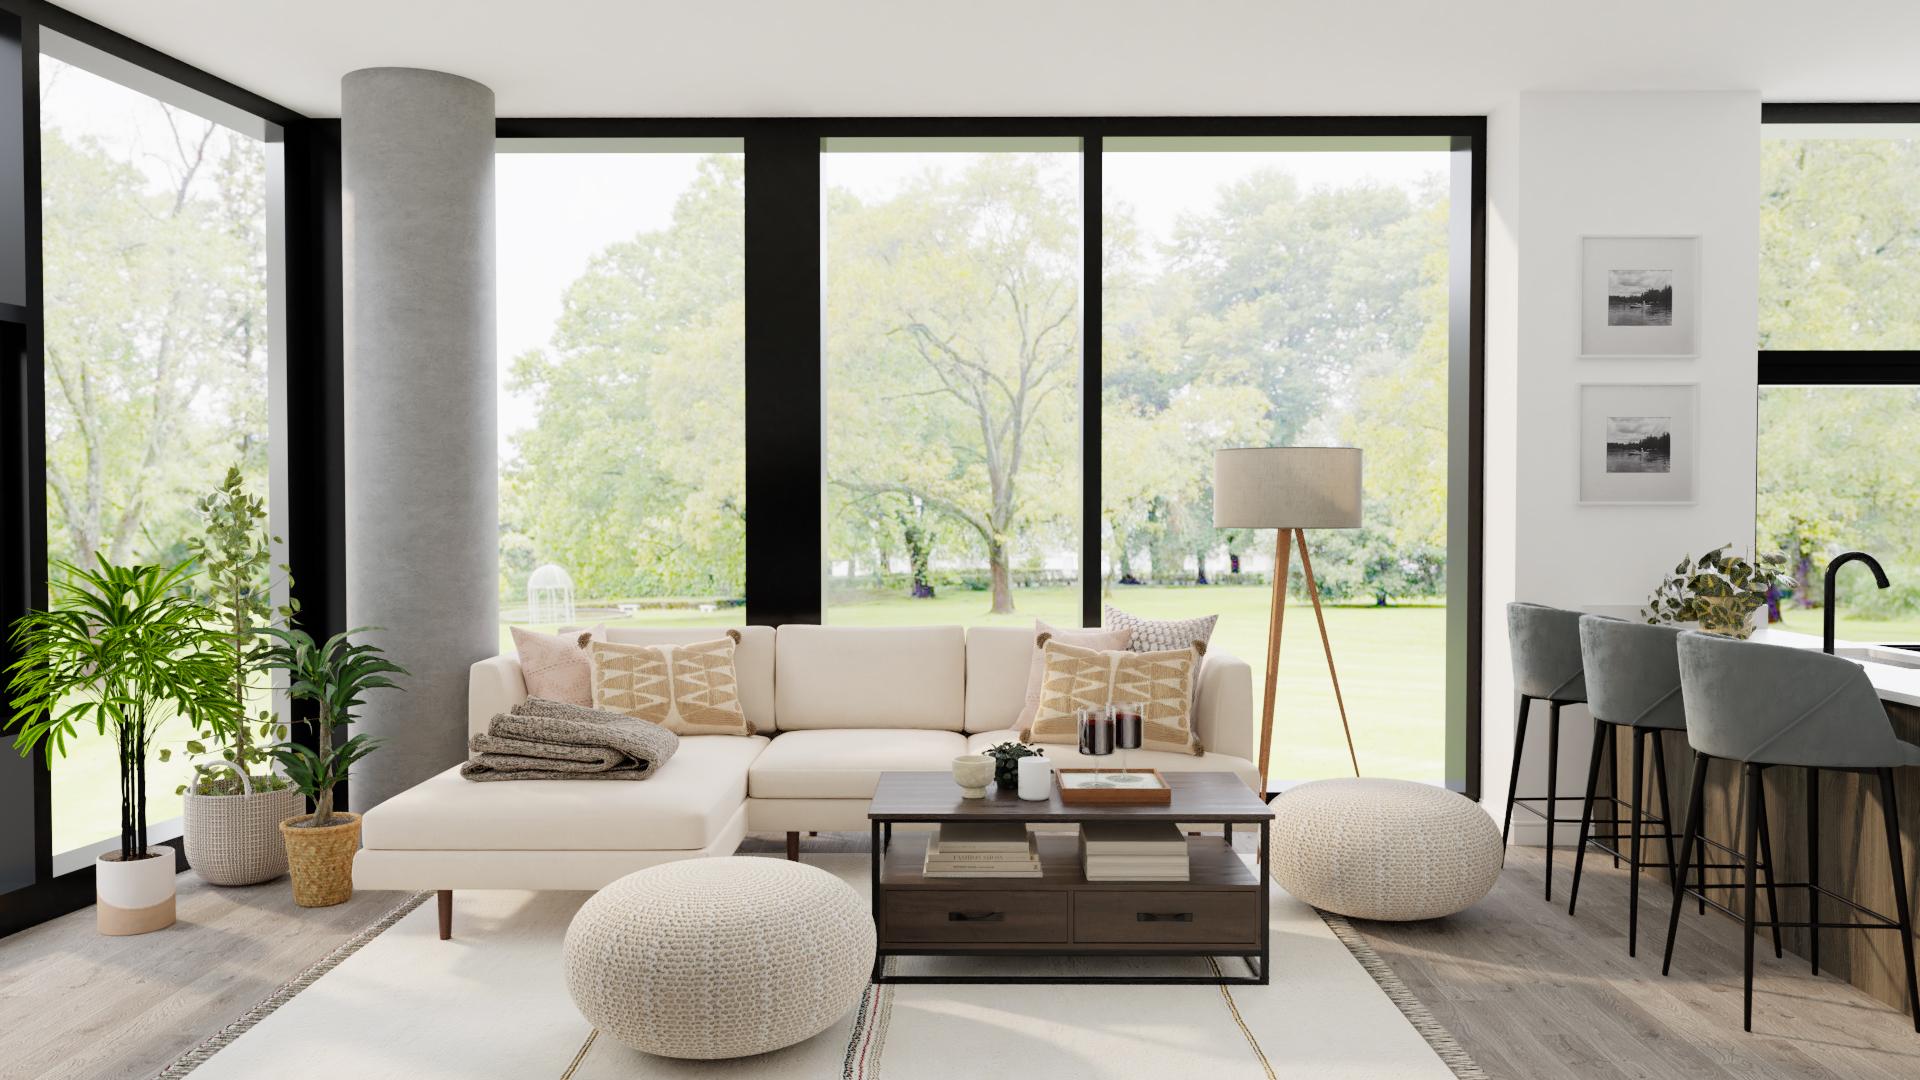 Mid Century Modern Living Room Design With Gray & White Tones